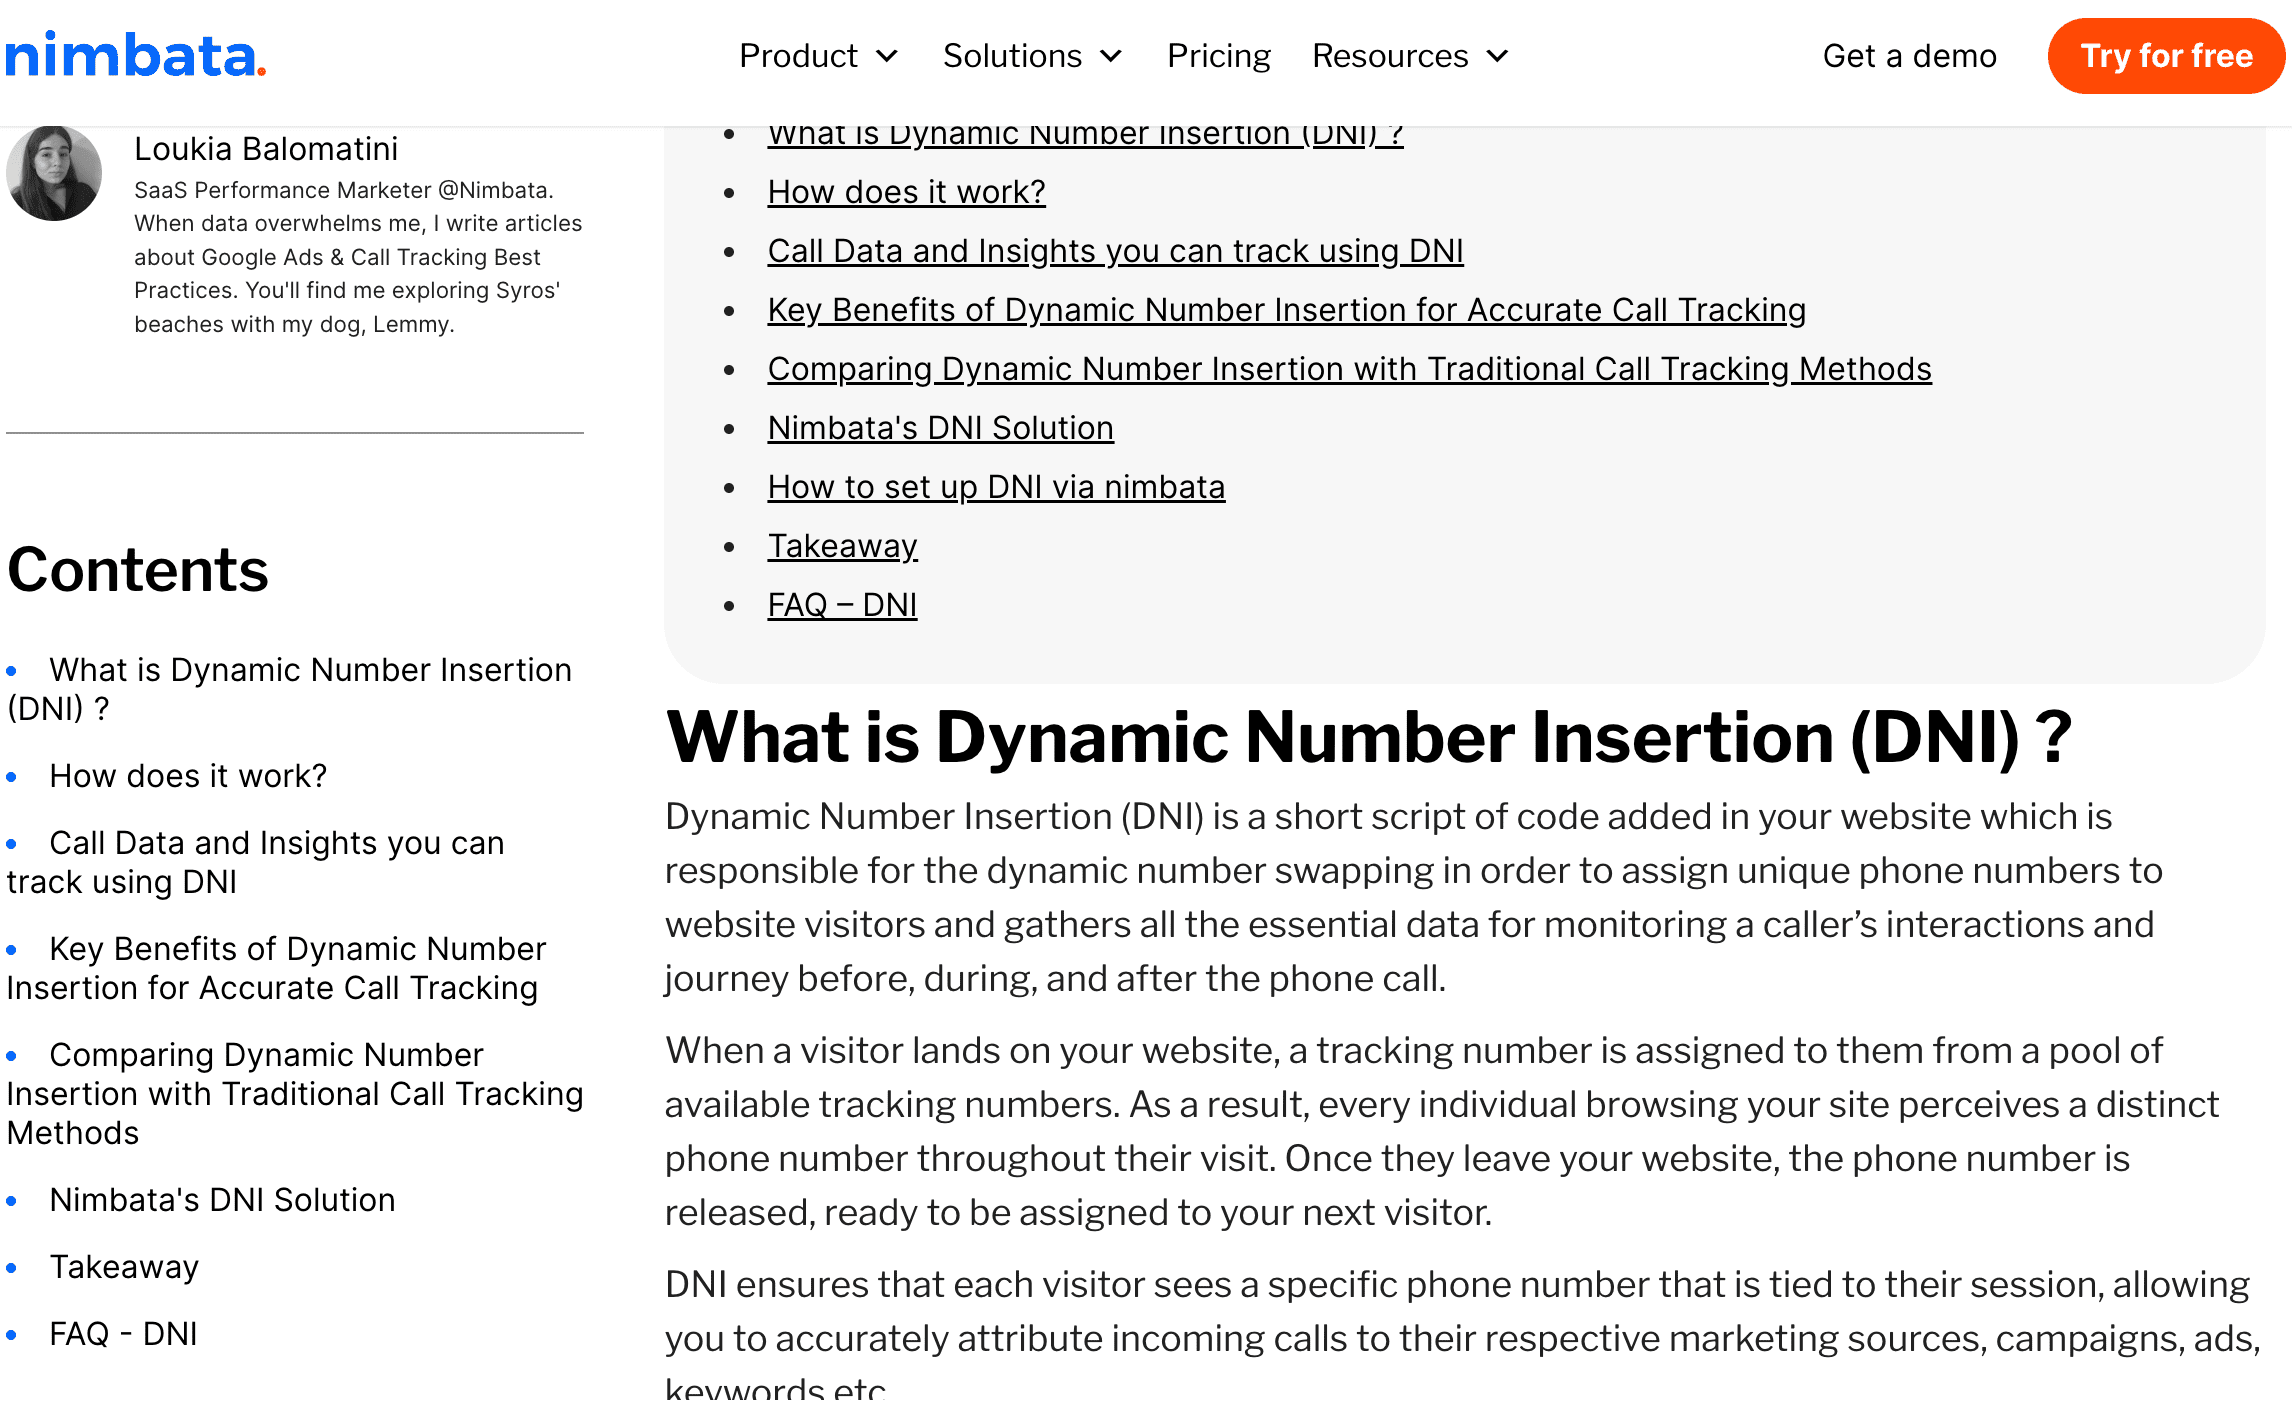 nimbata dynamic number insertion